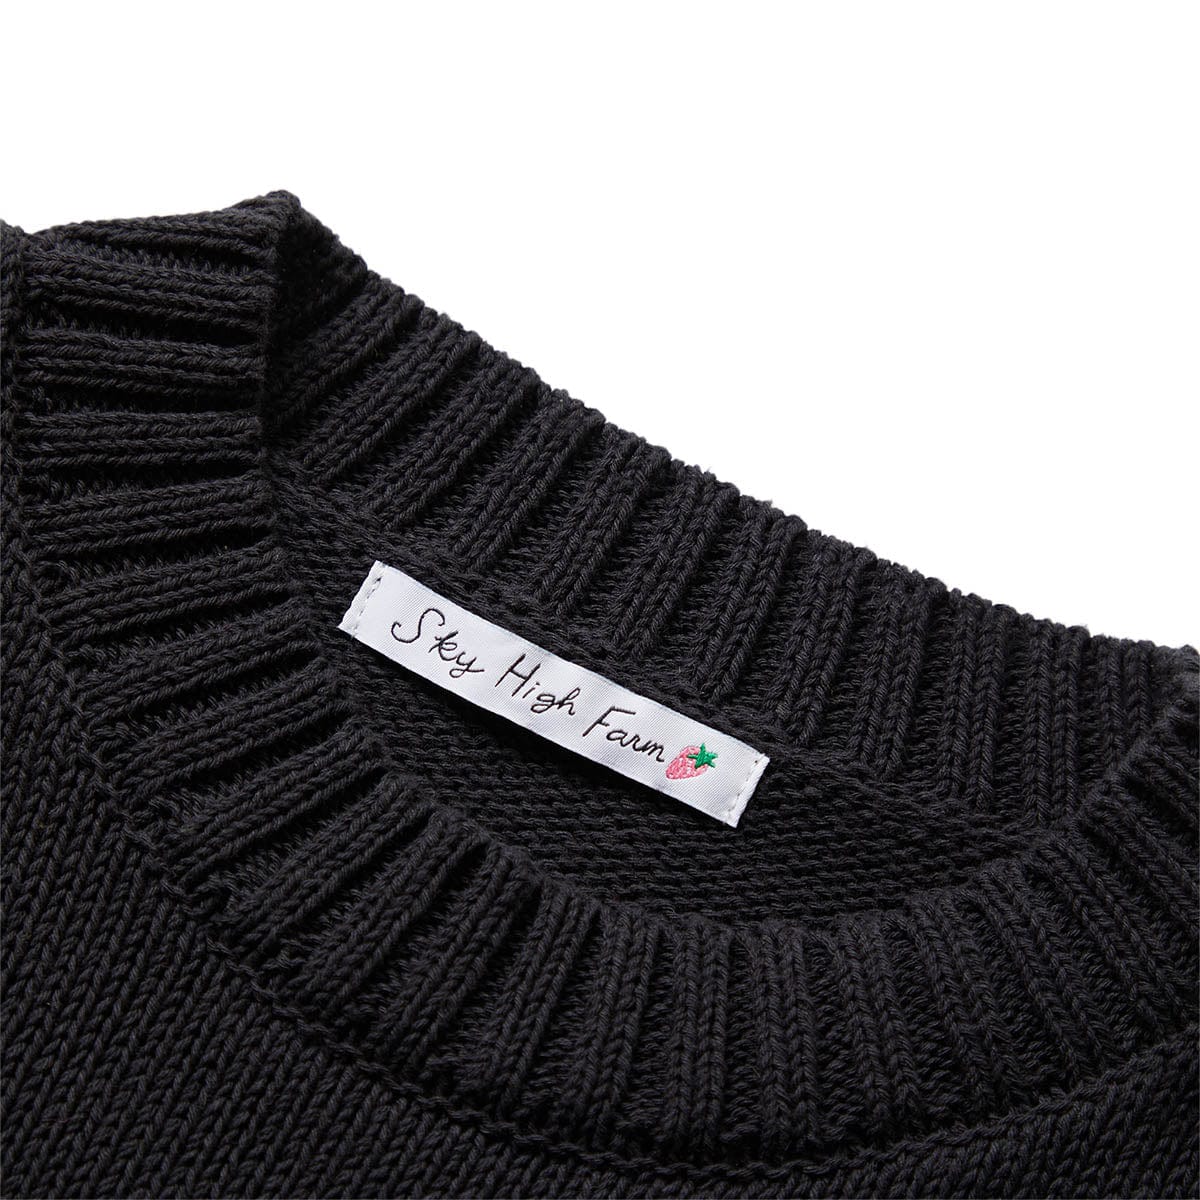 Sky High Farm Workwear Knitwear RECYCLED COTTON INTARSIA SWEATER KNIT